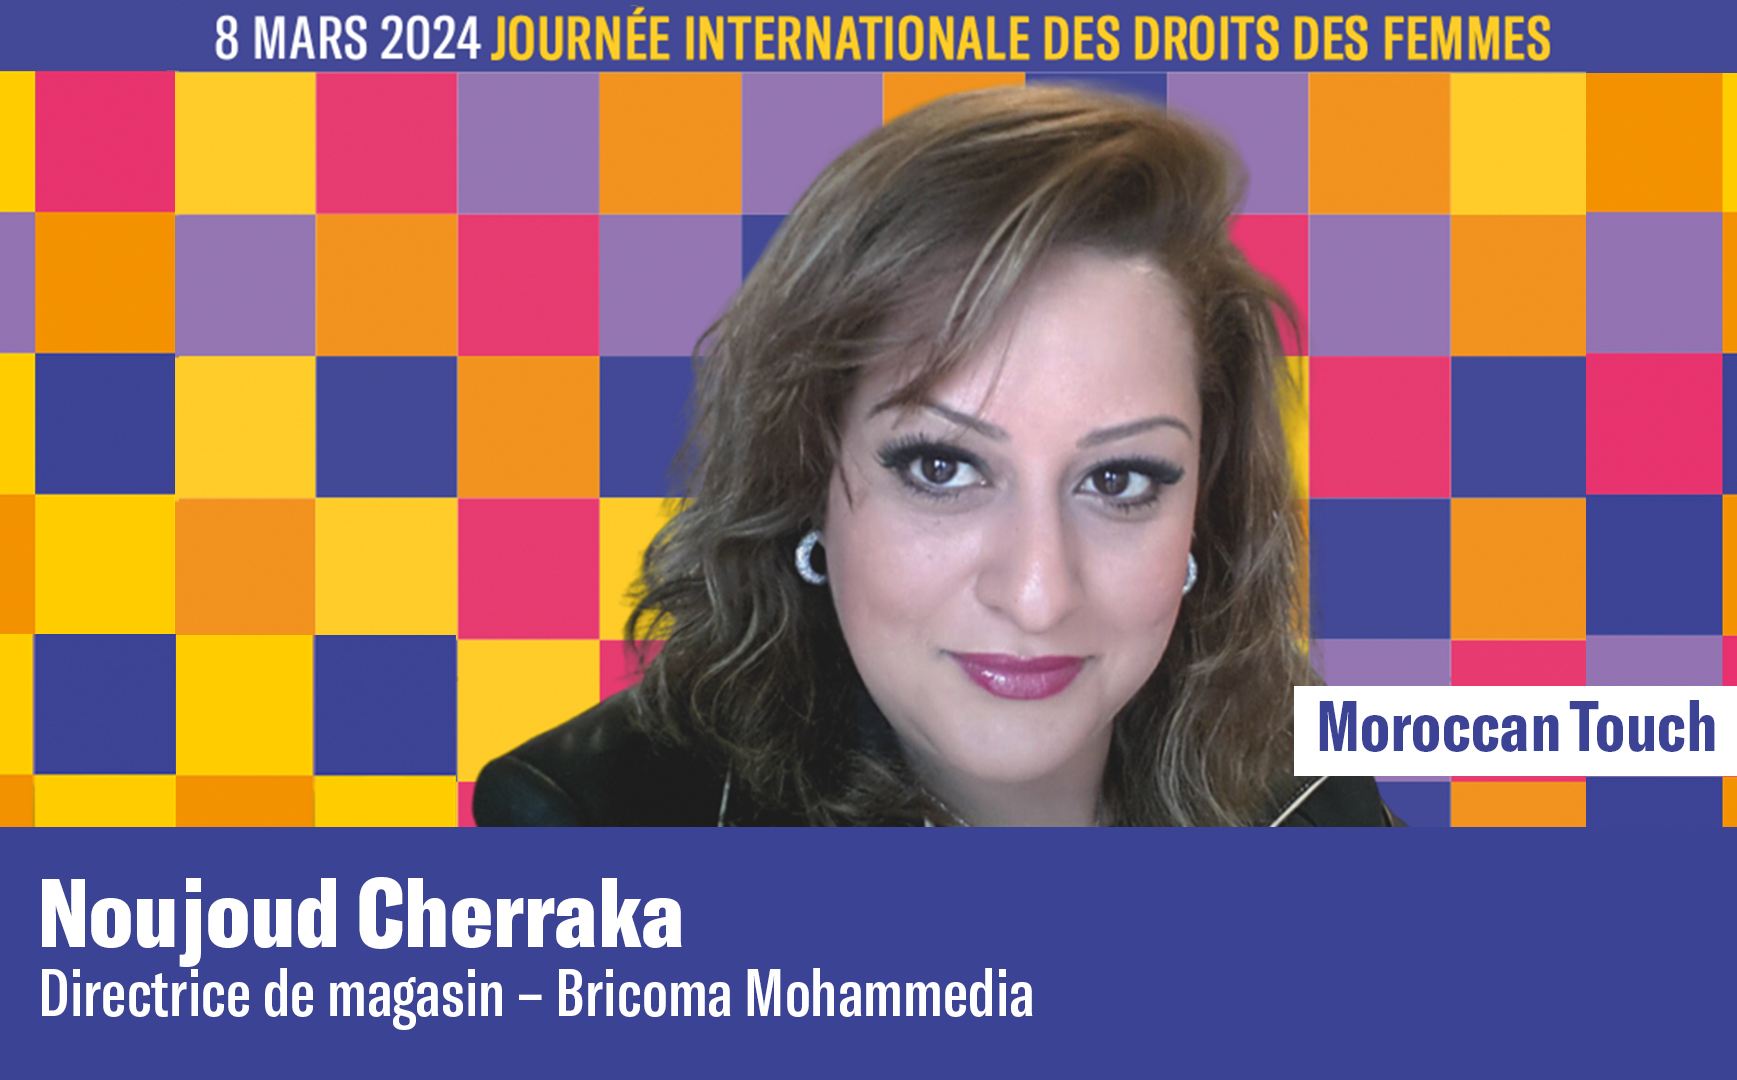 Noujoud Cherraka: Moroccan touch |  Challenge.mon